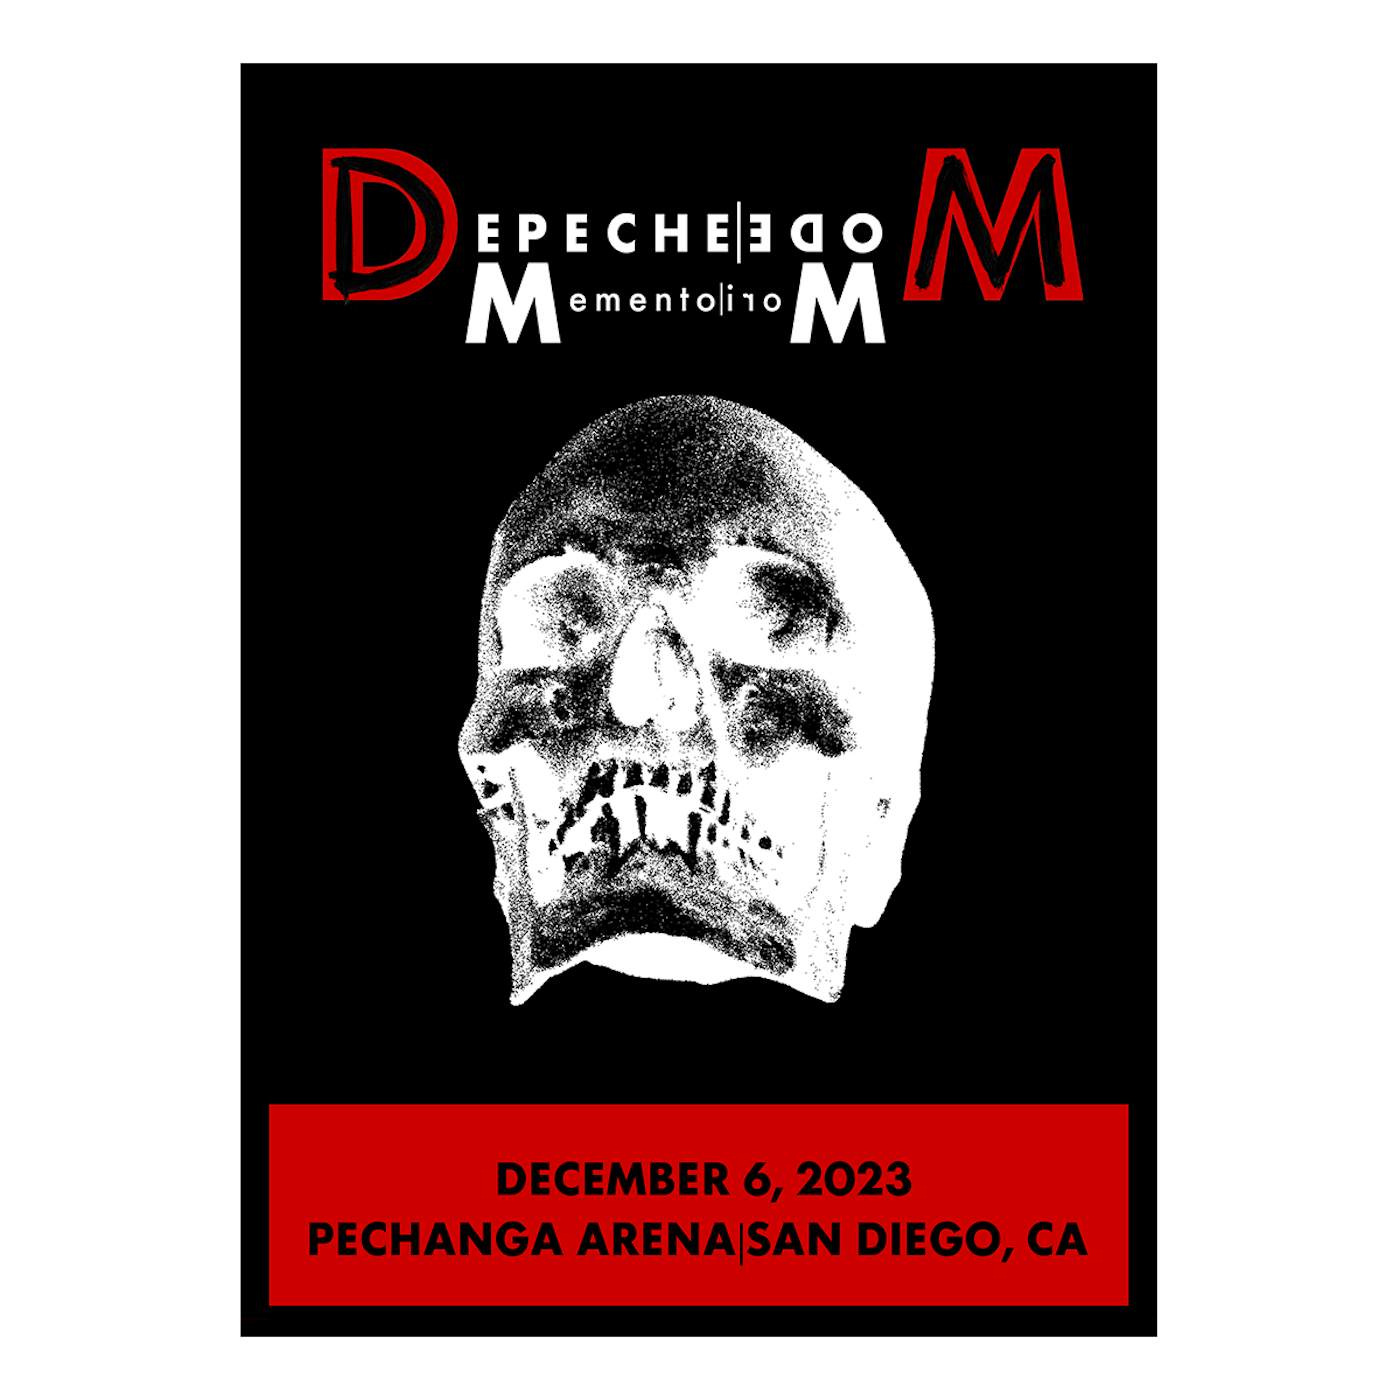 Depeche Mode Memento Mori Tour 2023 San Diego Screen Print Poster Limited Edition